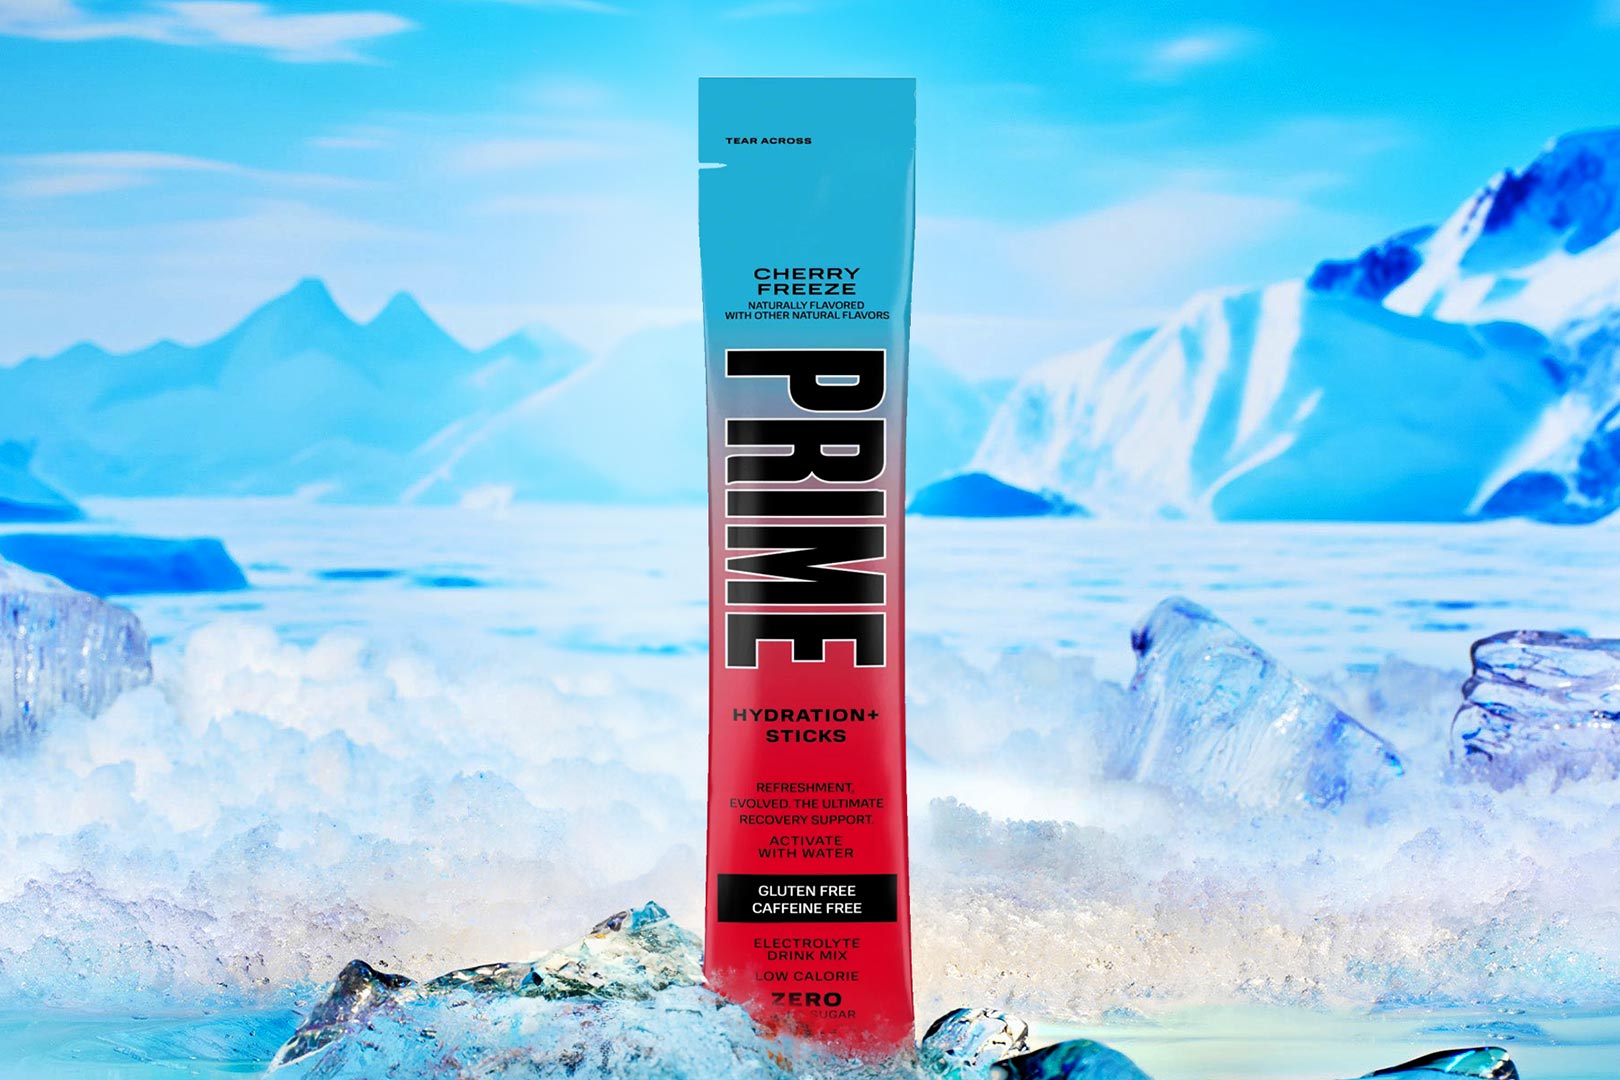 Hydration Cherry Freeze – PRIME